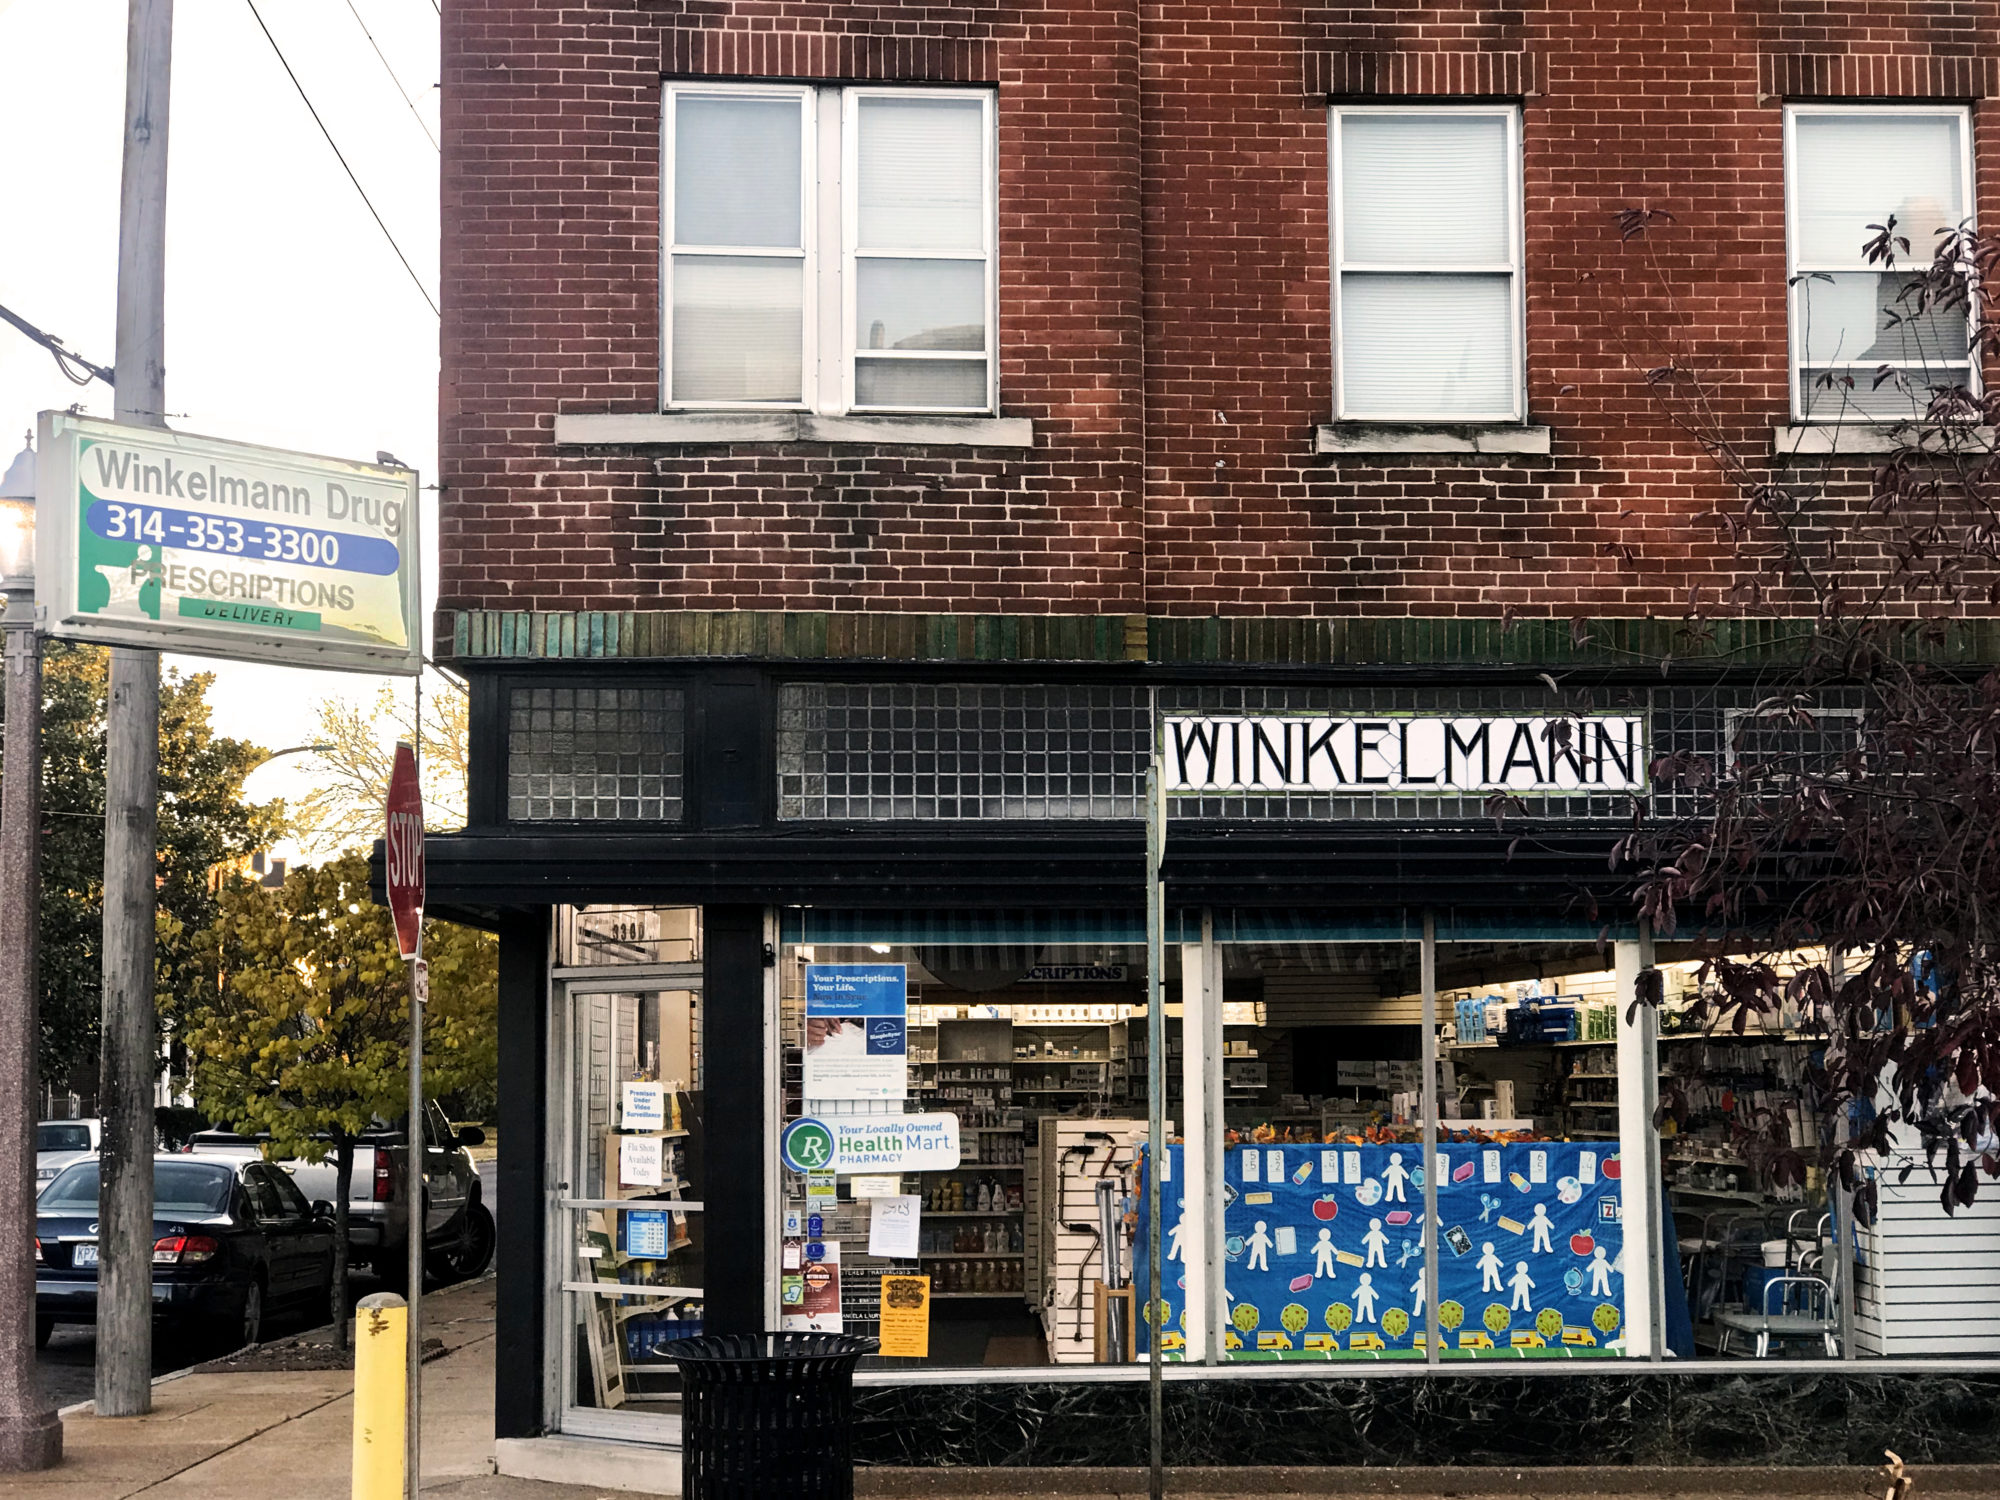 Winkelmann Drug at the corner of Meramec Street and Virginia Avenue in Downtown Dutchtown, St. Louis, MO.